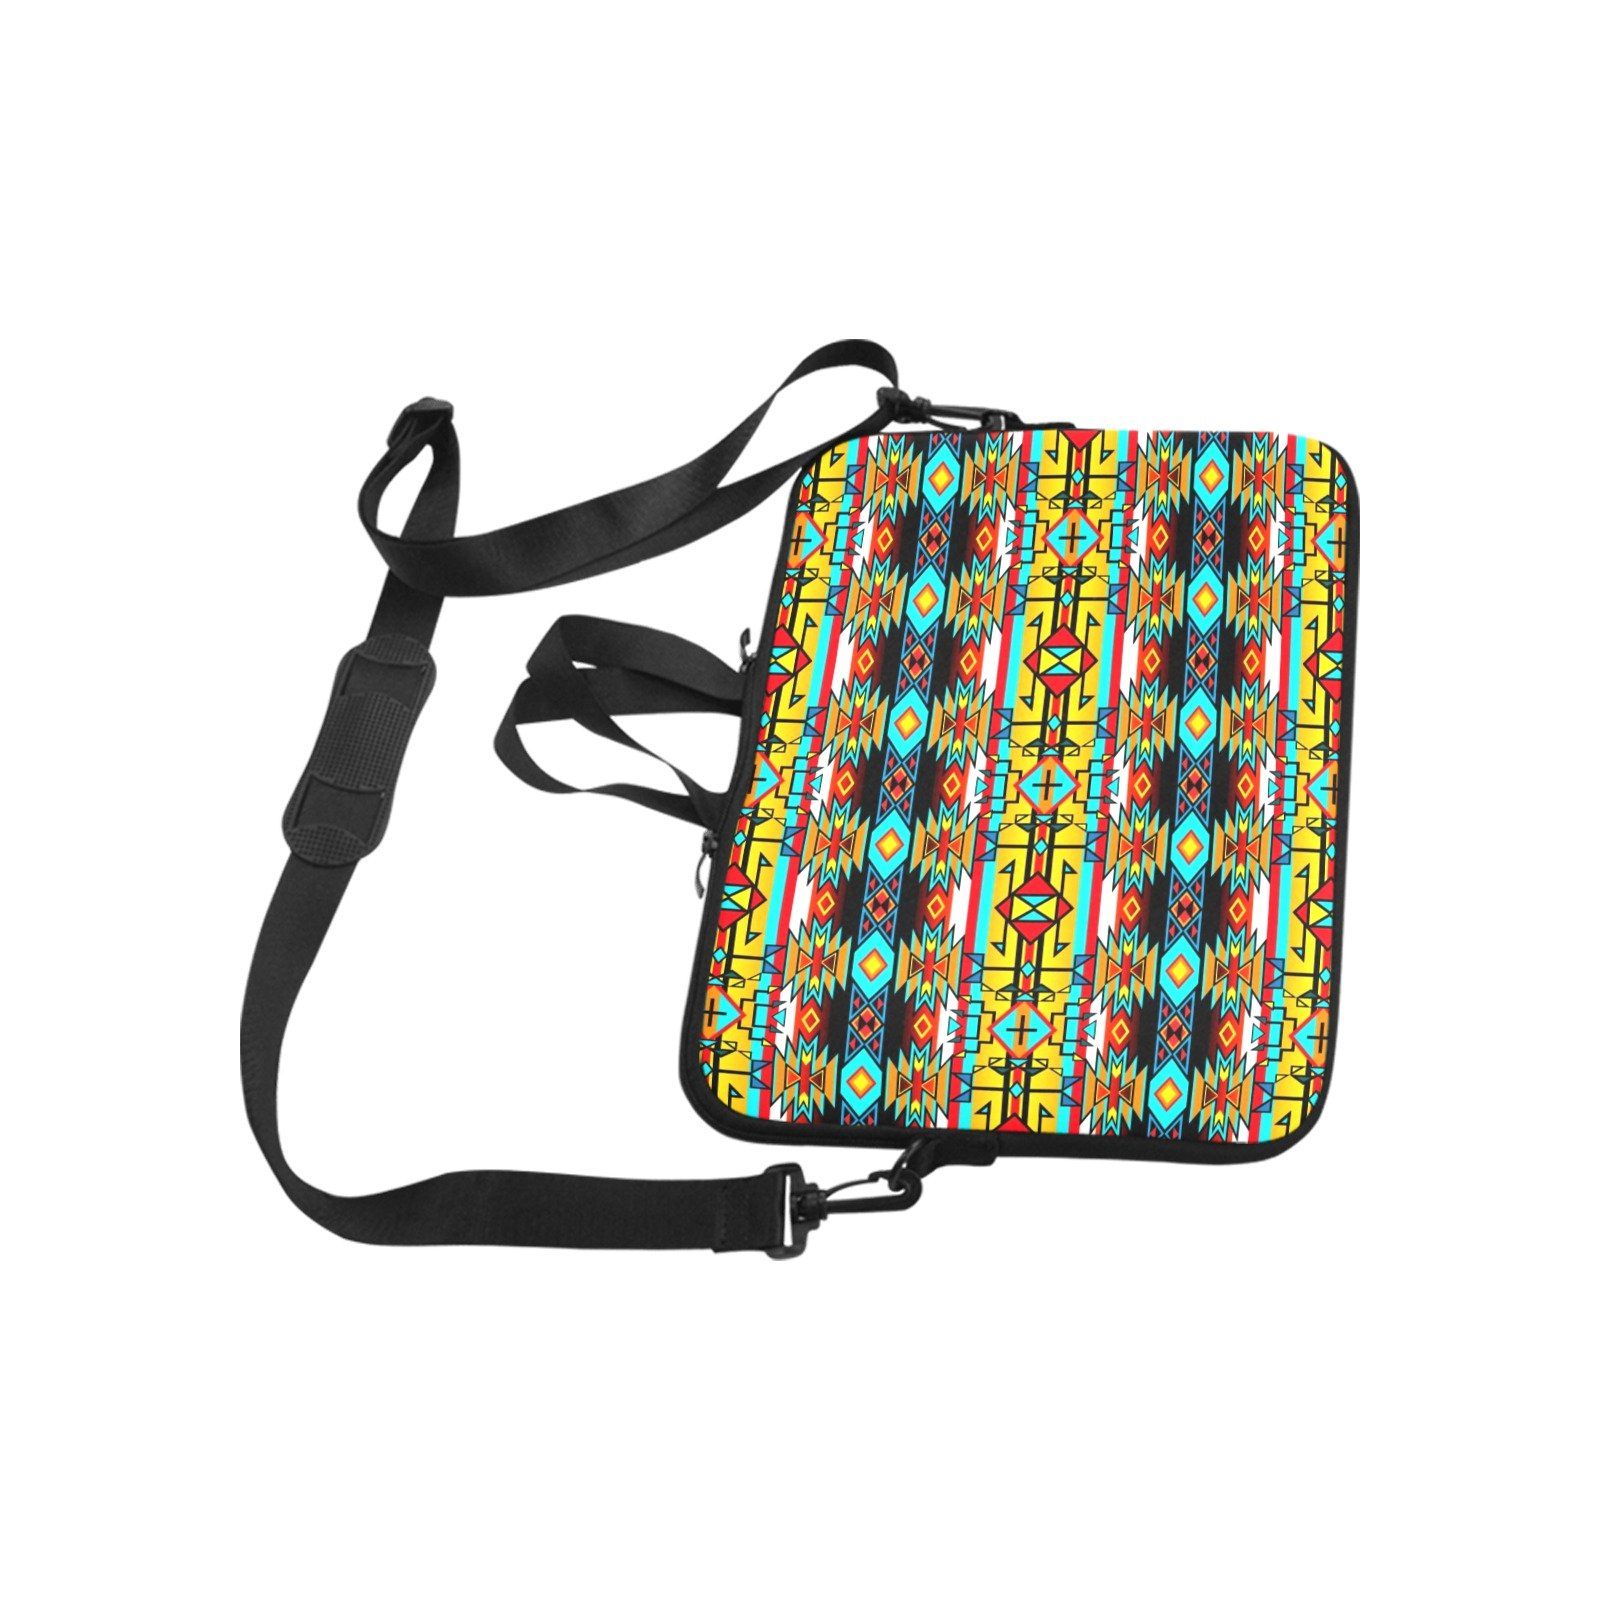 Force of Nature Twister Laptop Handbags 11" bag e-joyer 